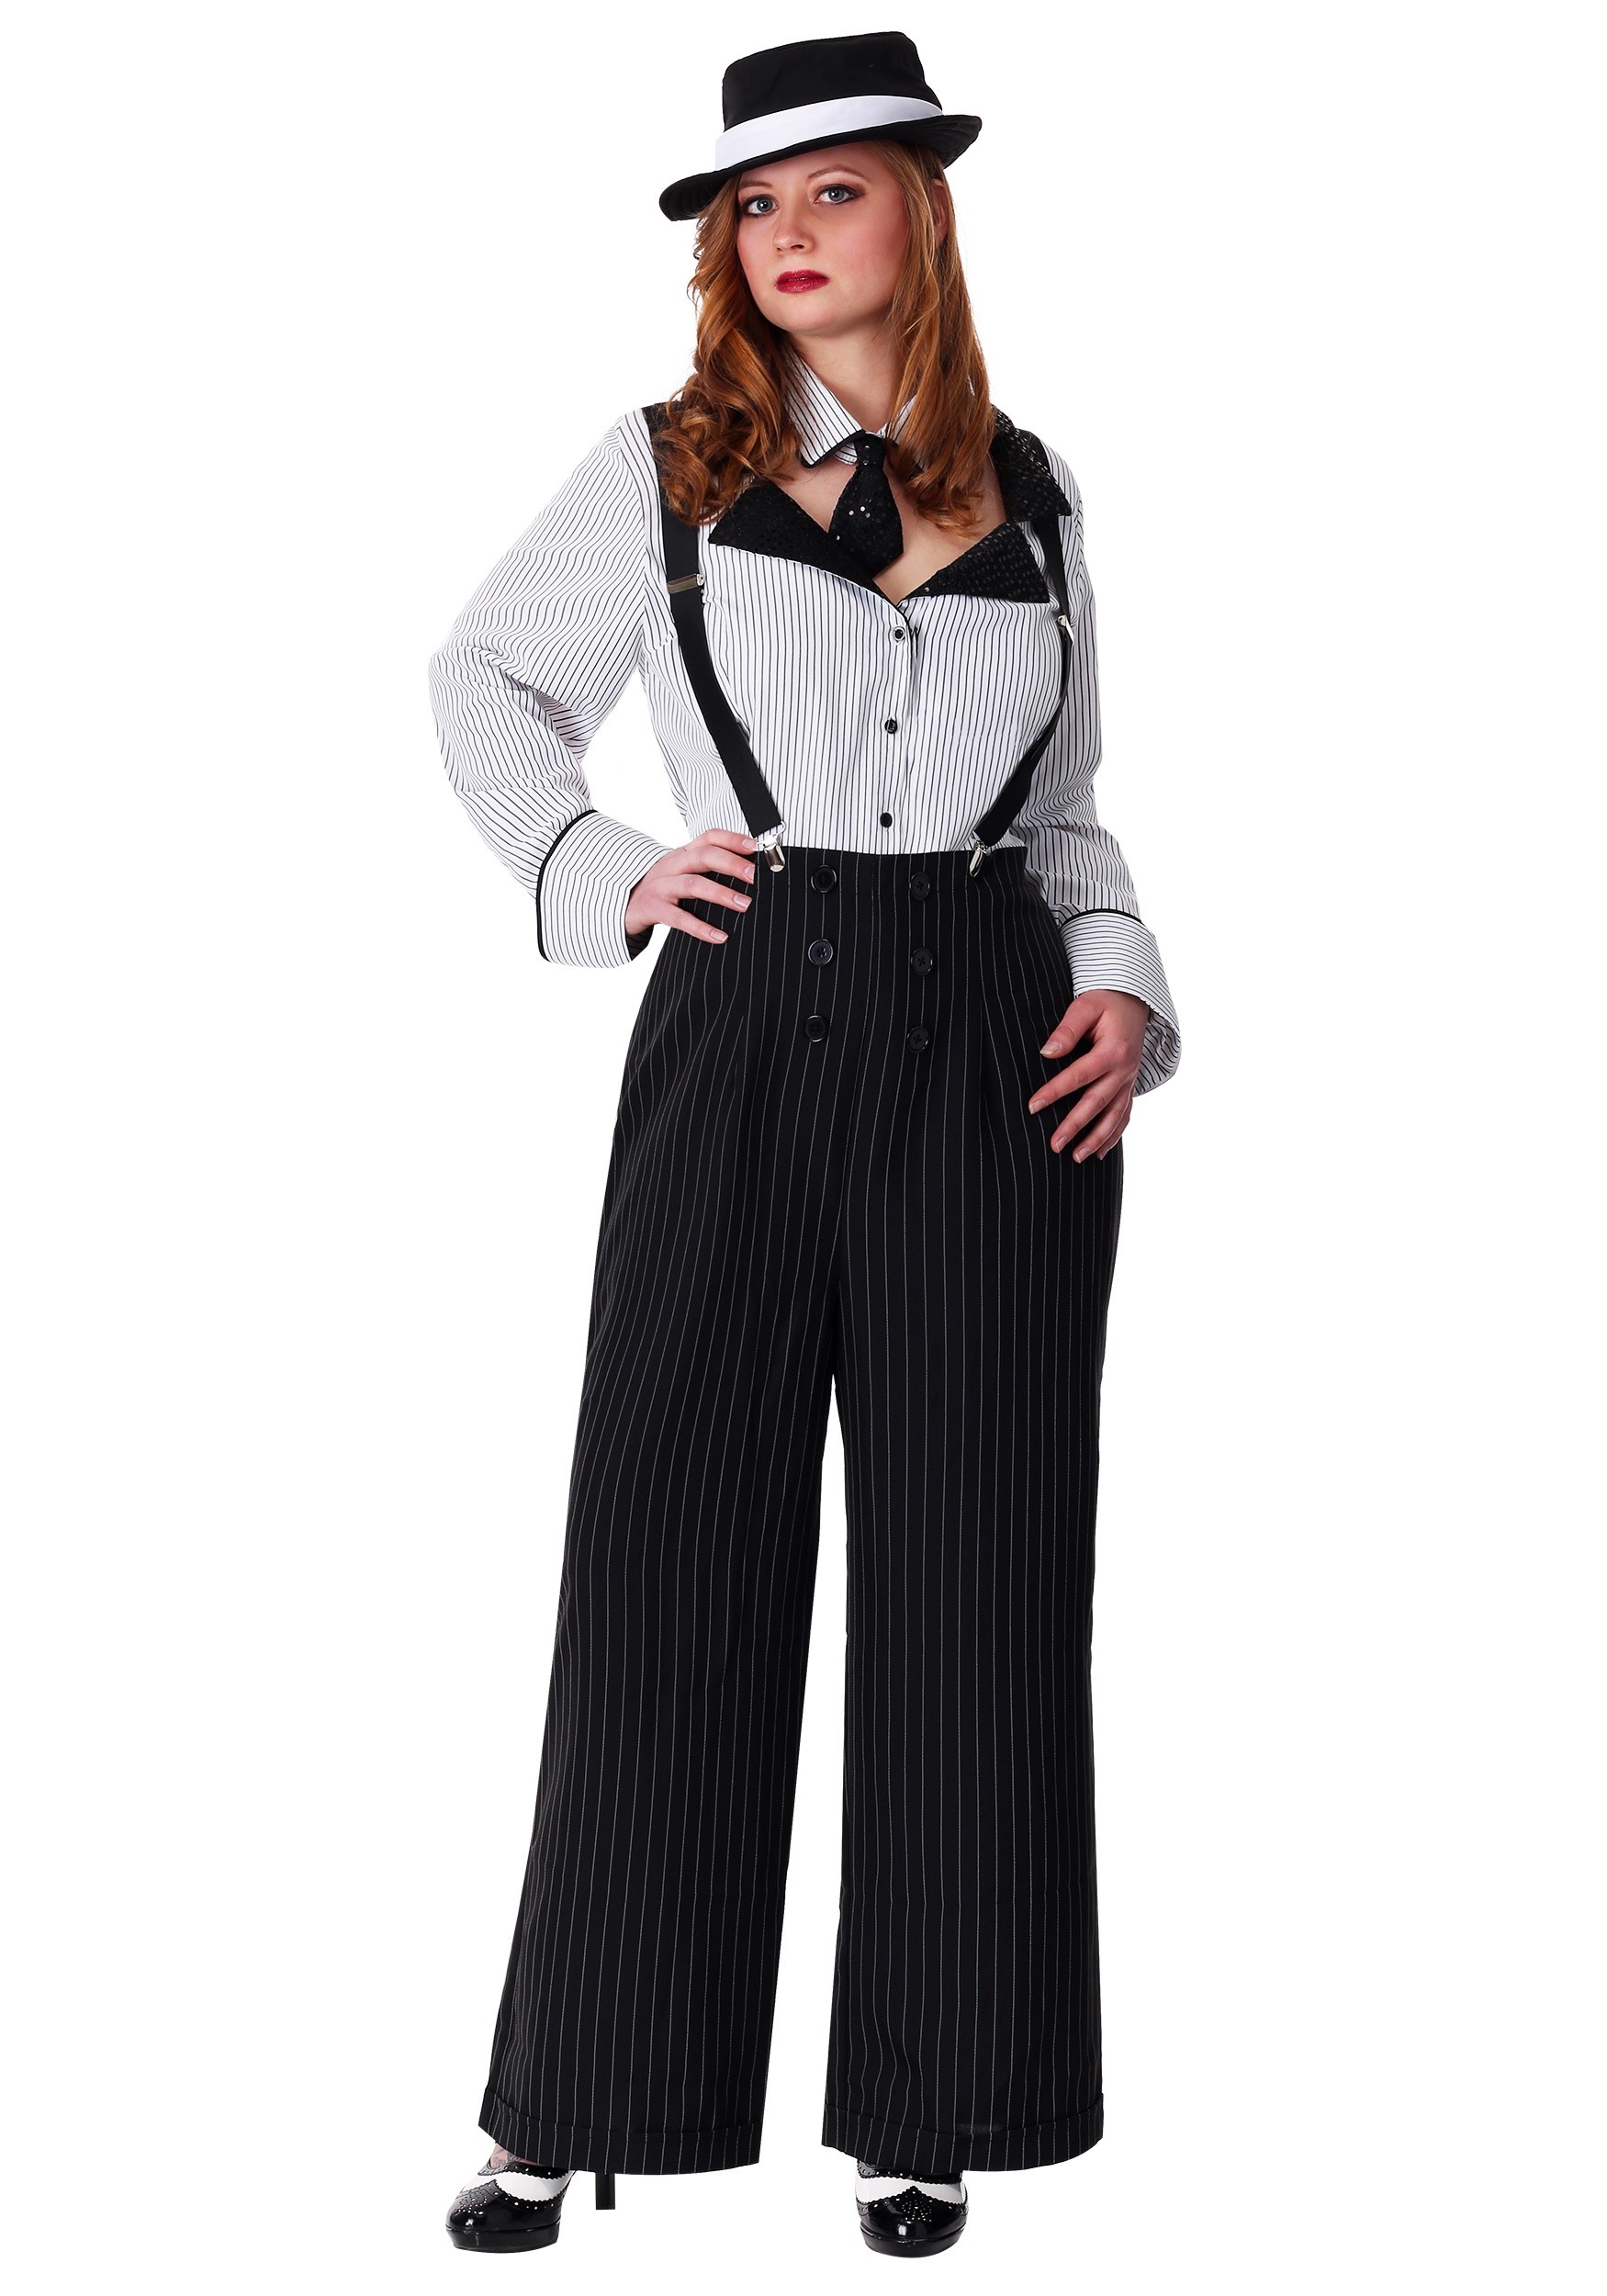 Photos - Fancy Dress FUN Costumes Plus Size Pinstripe Gangster Women's Costume Black/White